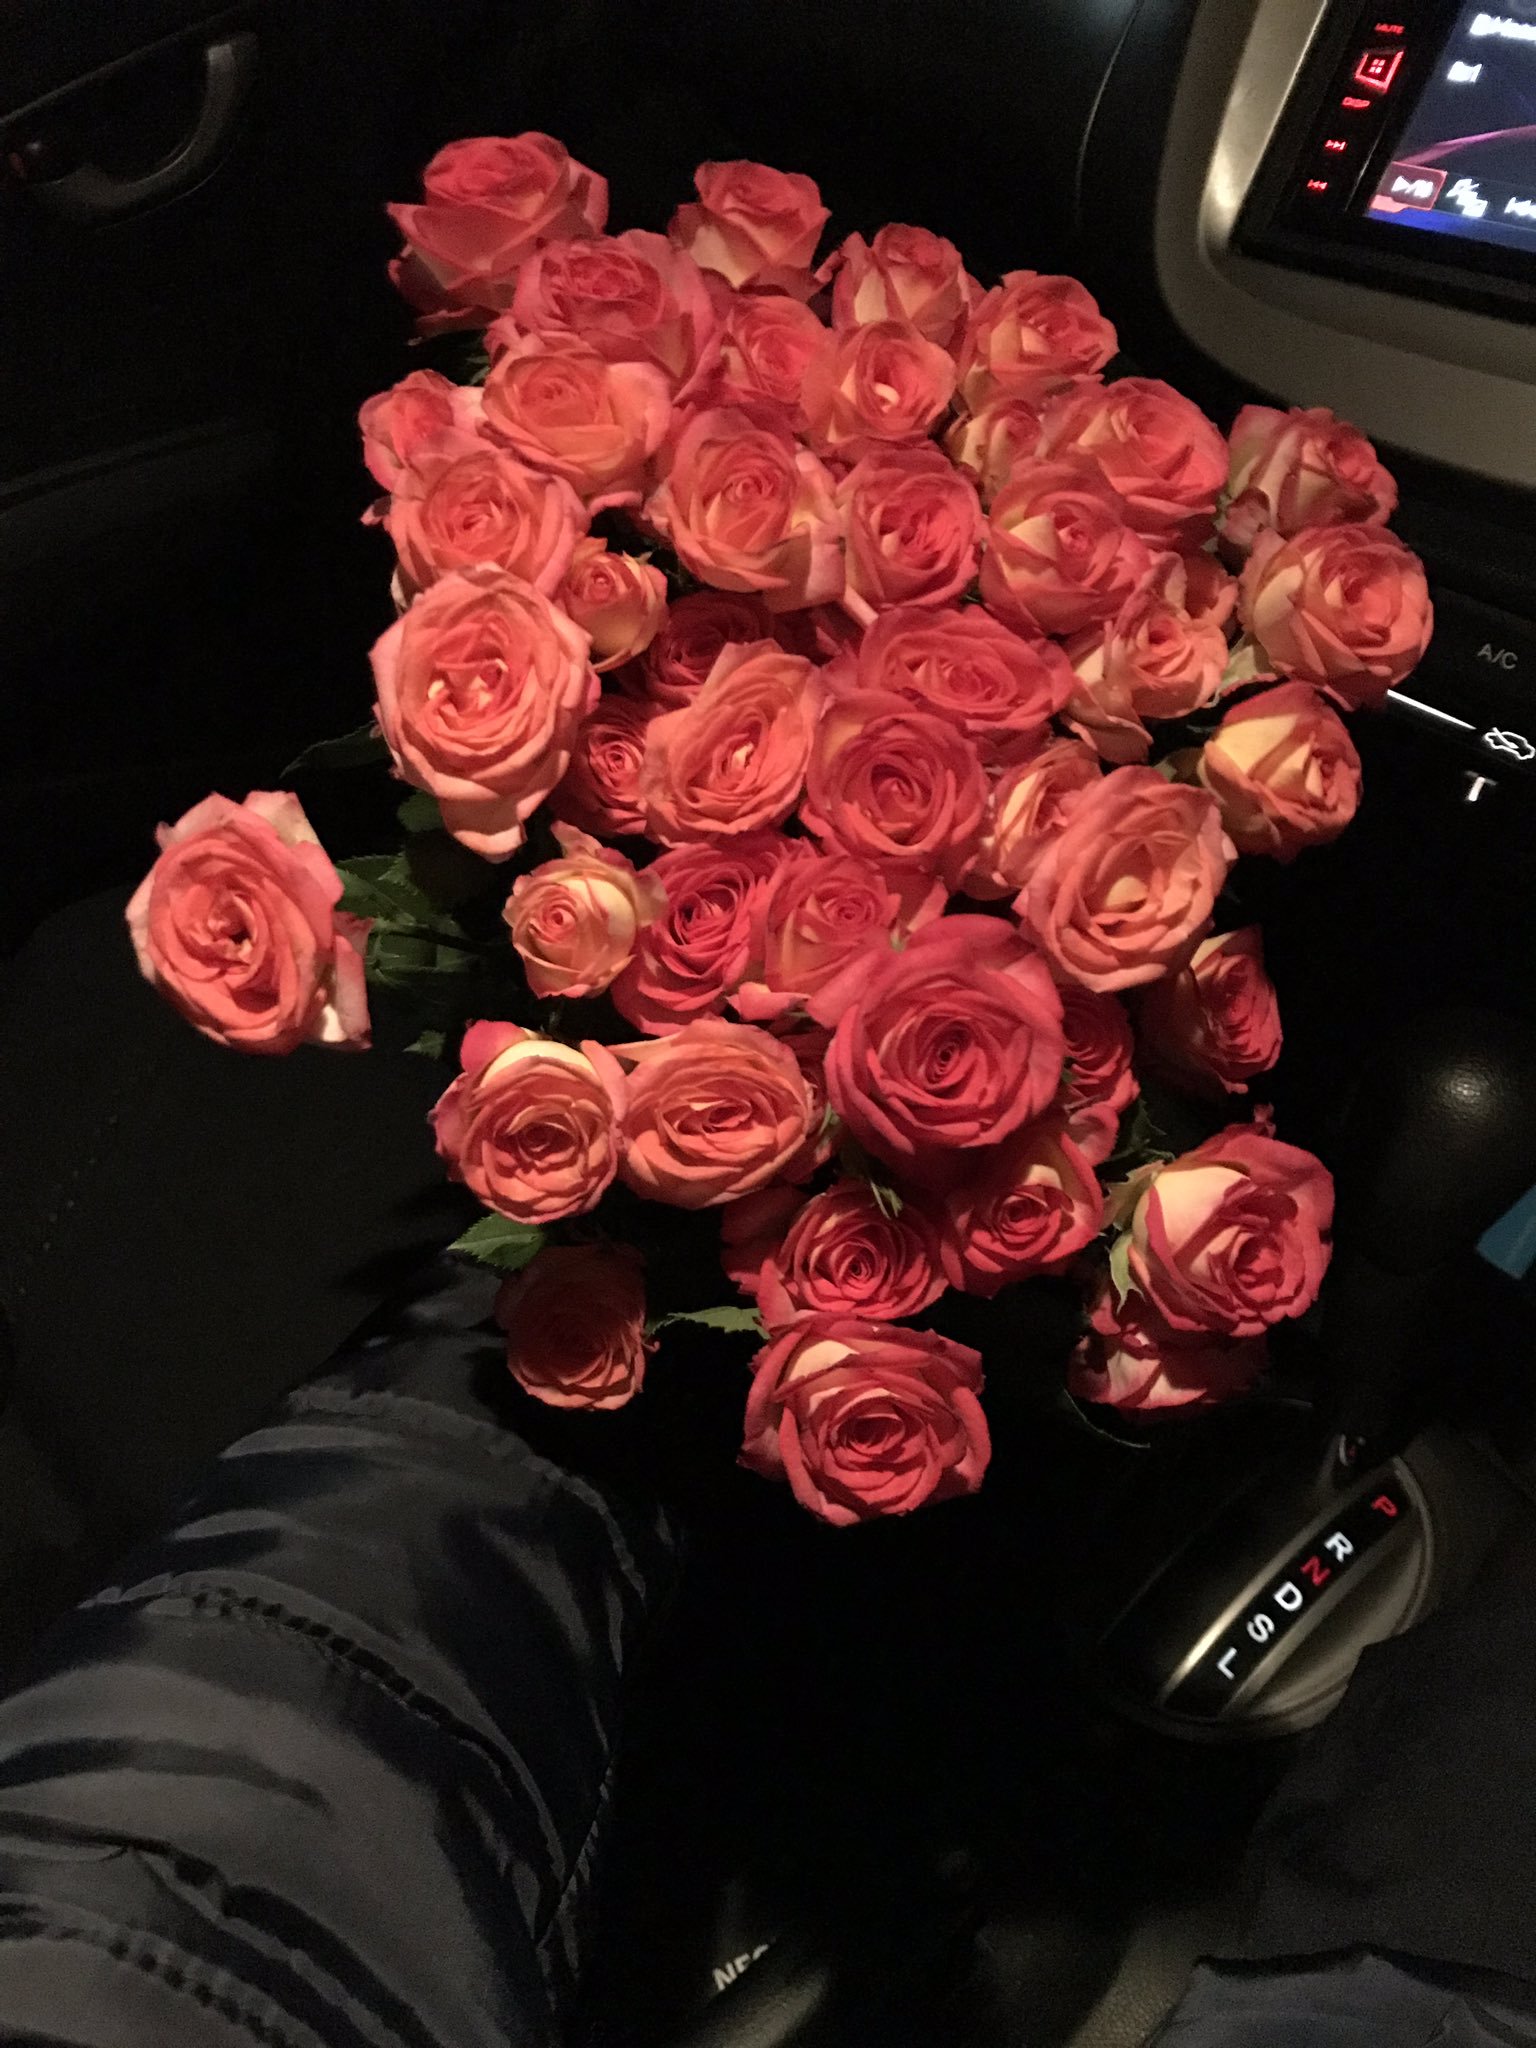 фото цветов роз букет в руках